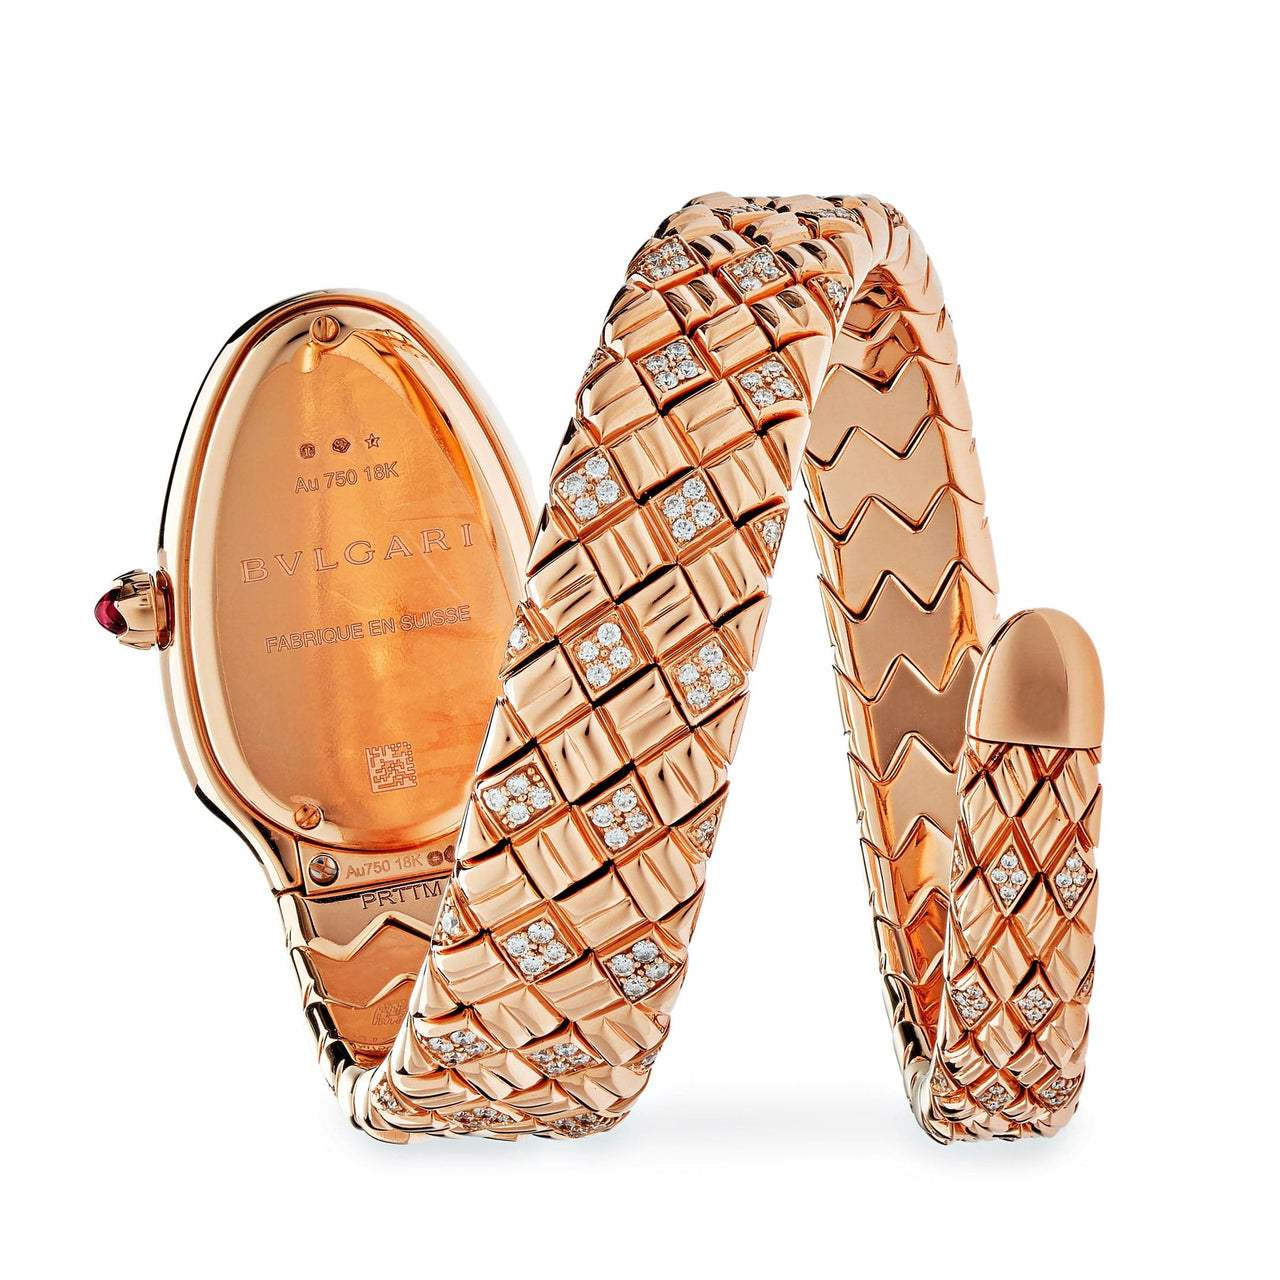 Luxury Watch Bvlgari Serpenti Spiga Rose Gold Malachite Dial Diamond Watch 103626 Wrist Aficionado